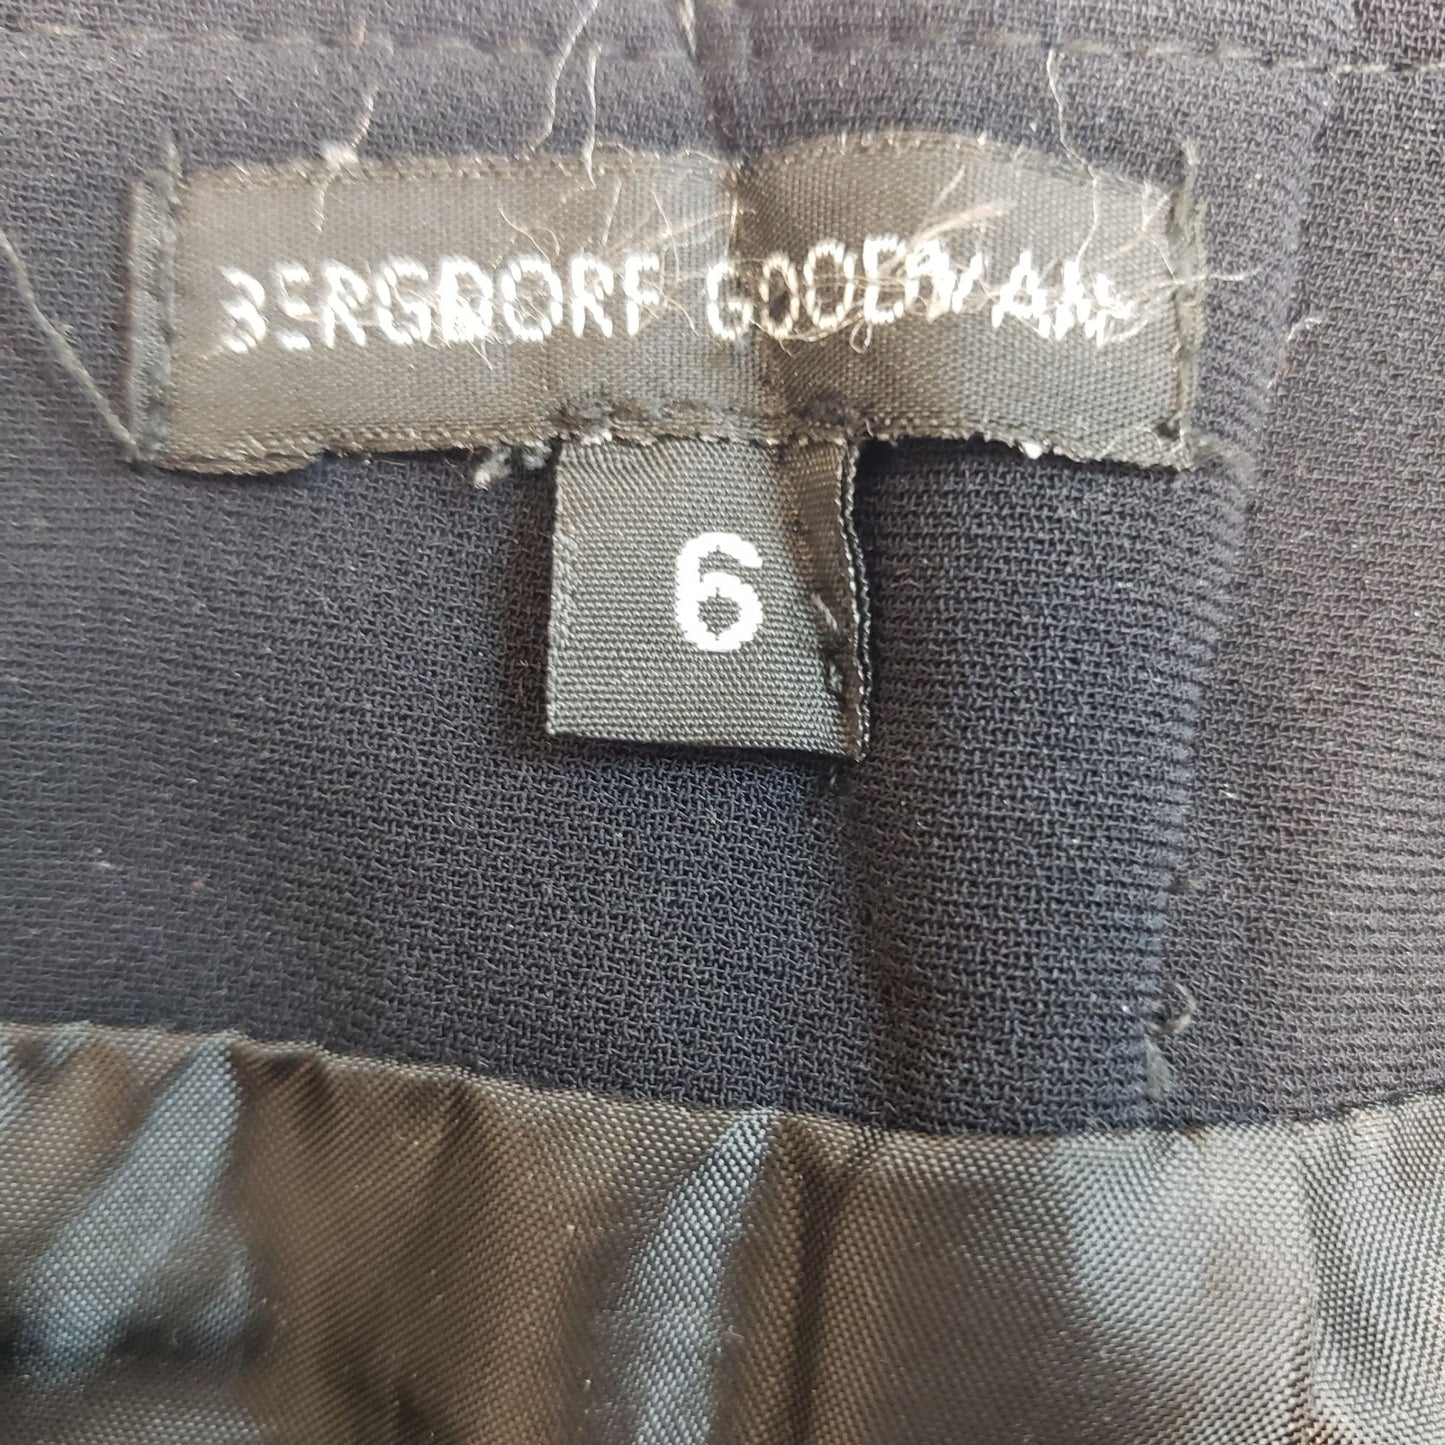 Bergdorf Goodman Pleat Front Pencil Skirt Size 6